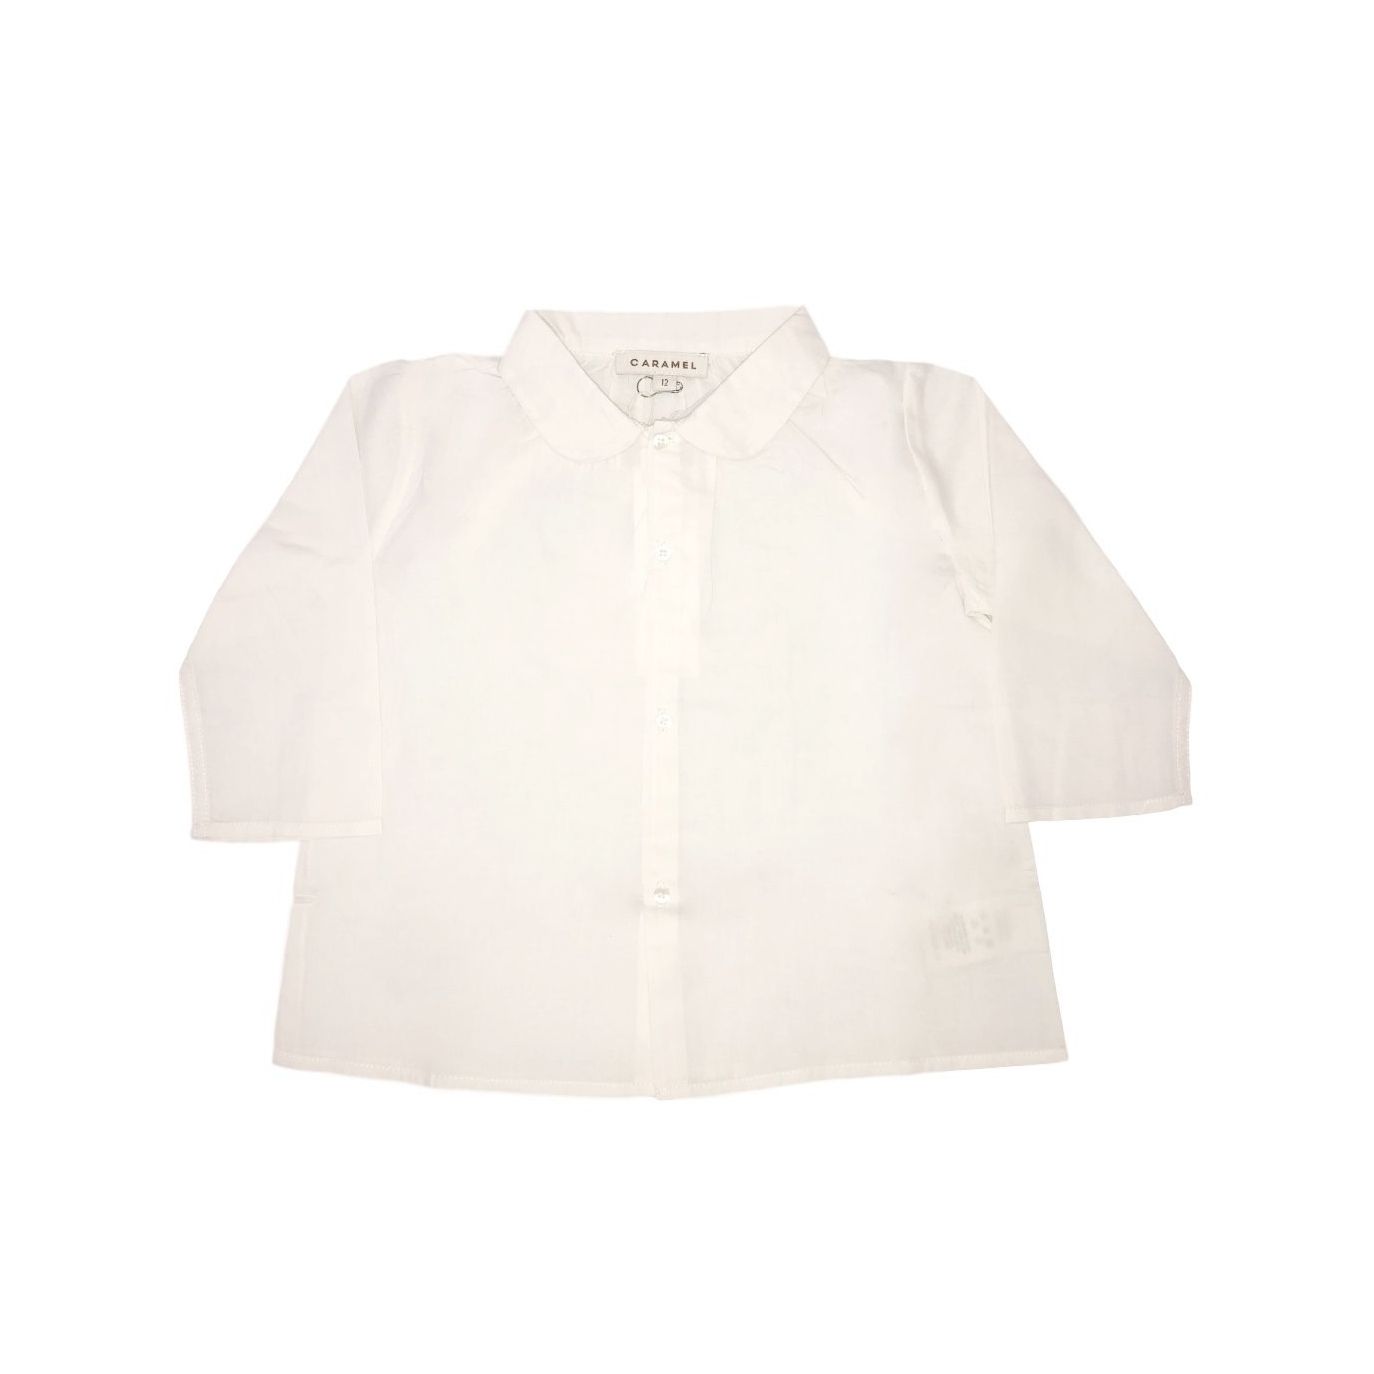 Caramel Baby & Child - Westminister Baby Shirt White - Blusas y camisetas -  